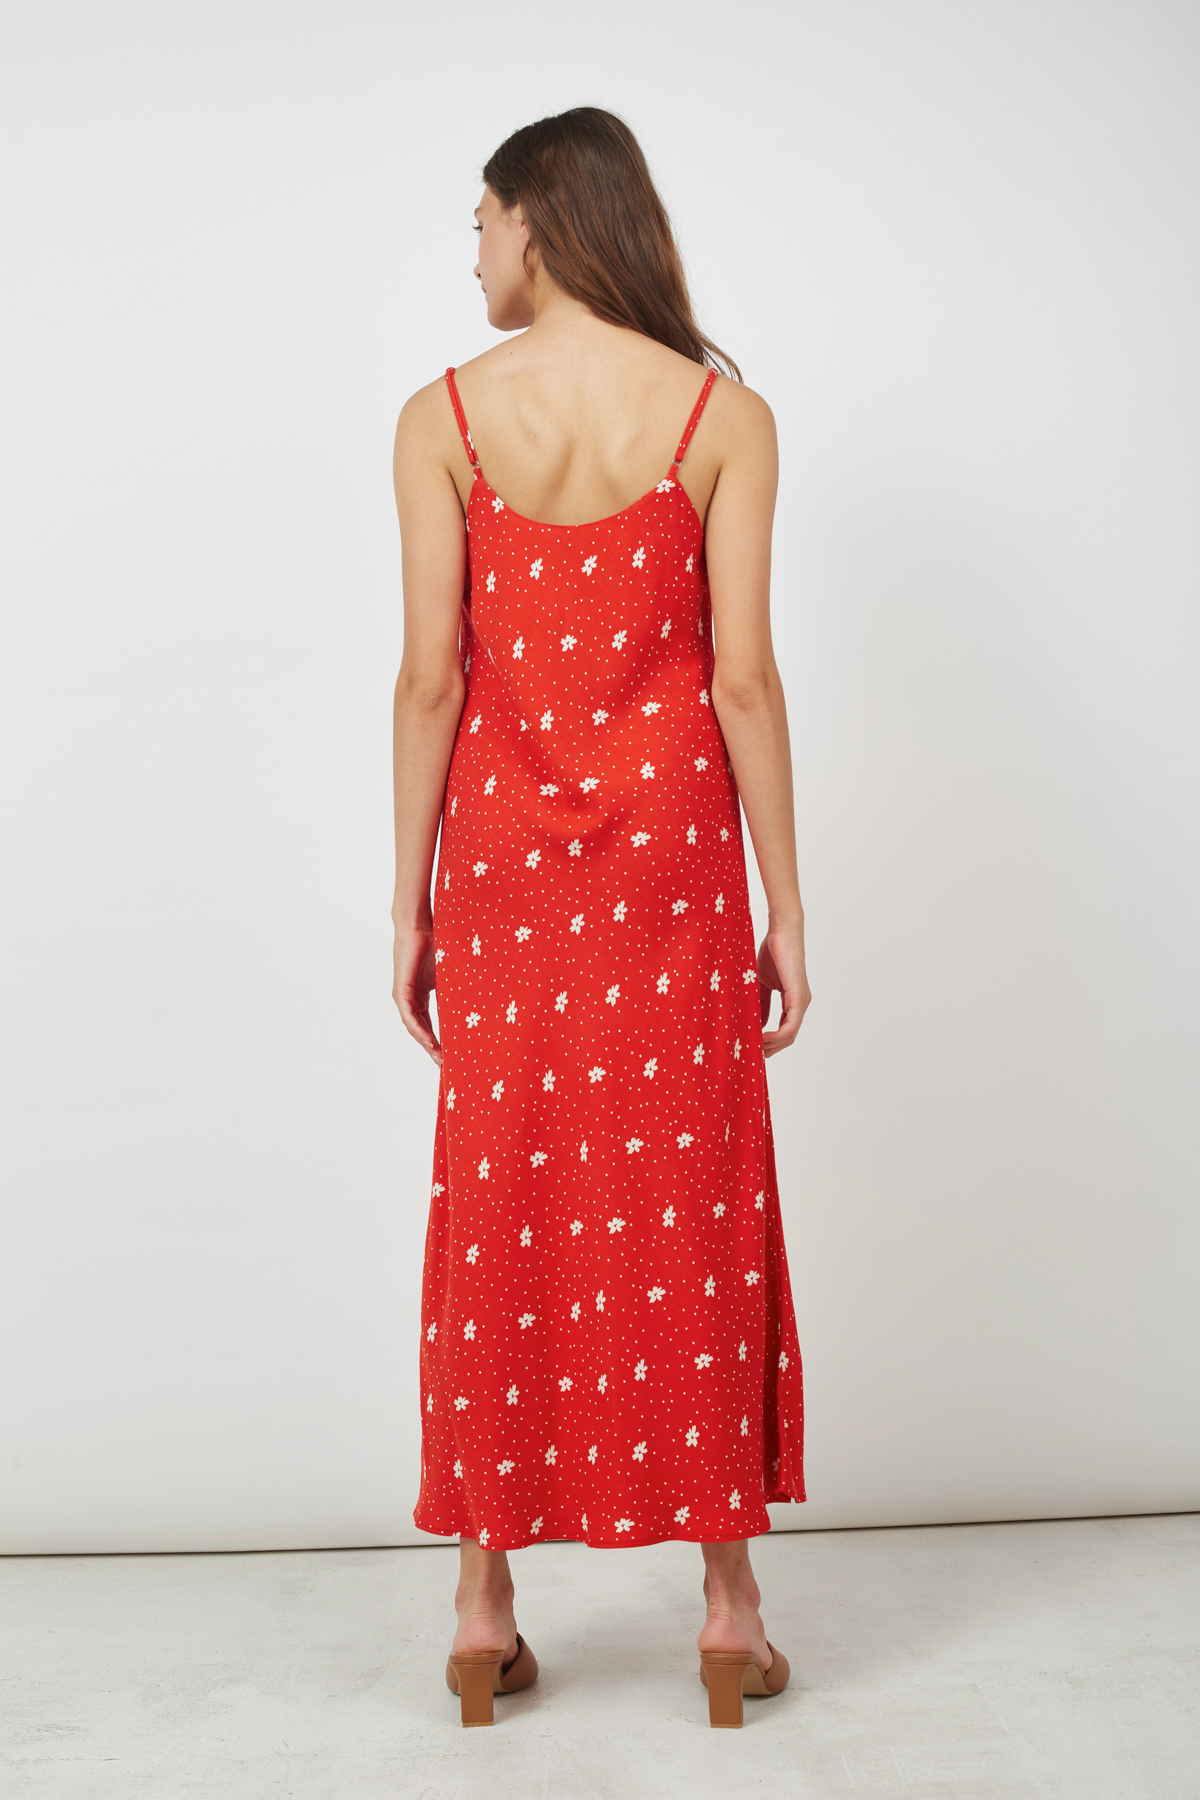 Viscose red slip dress in print flowers, photo 6